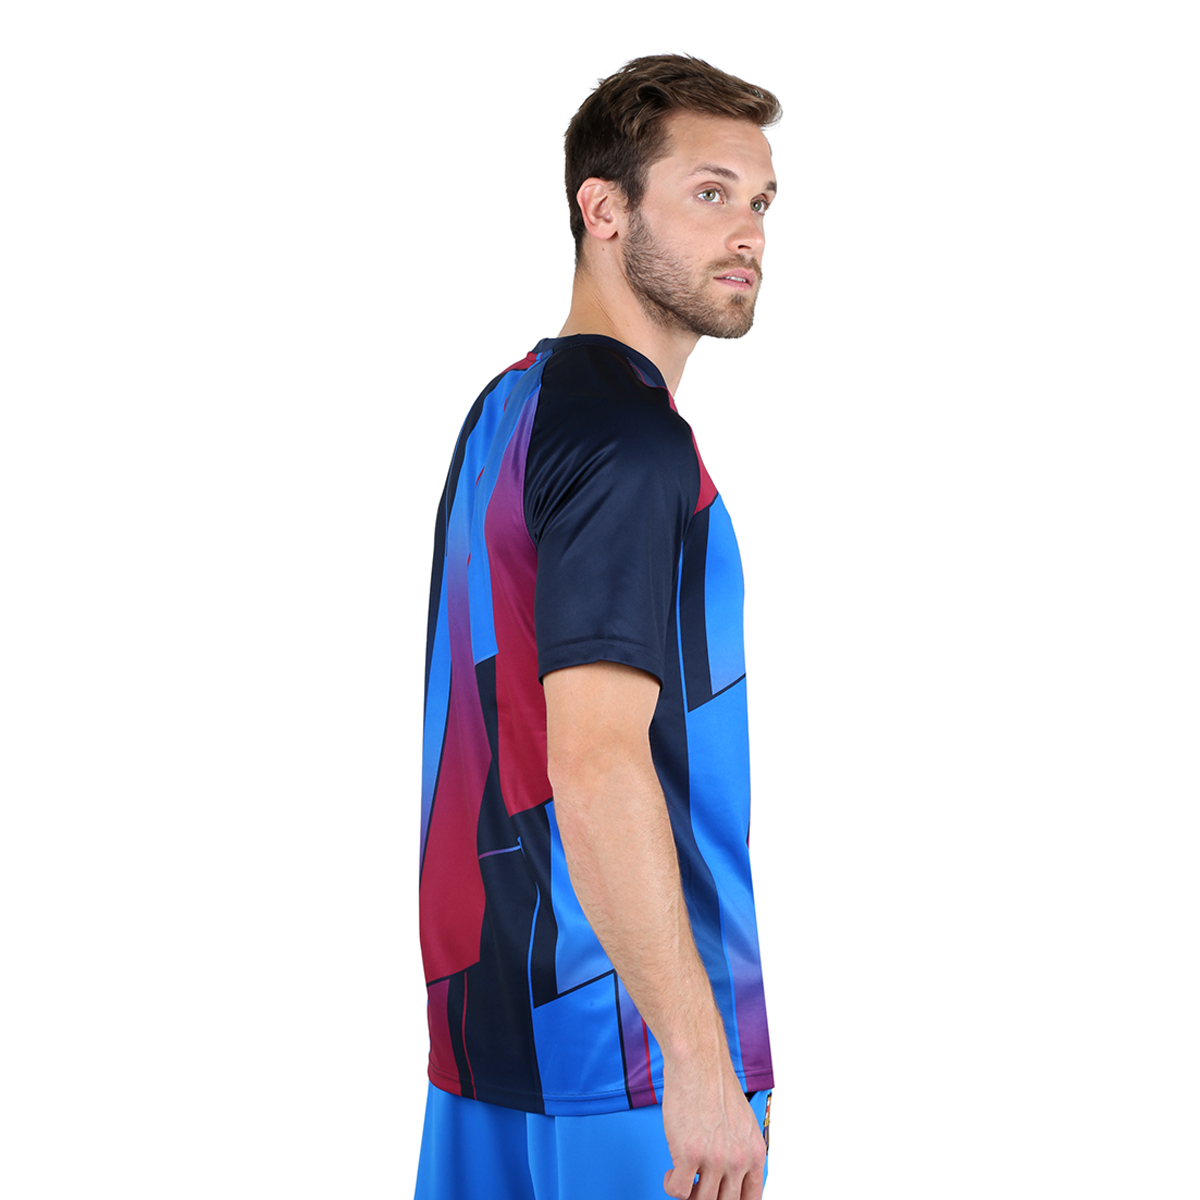 Camiseta Nike Fc Barcelona,  image number null